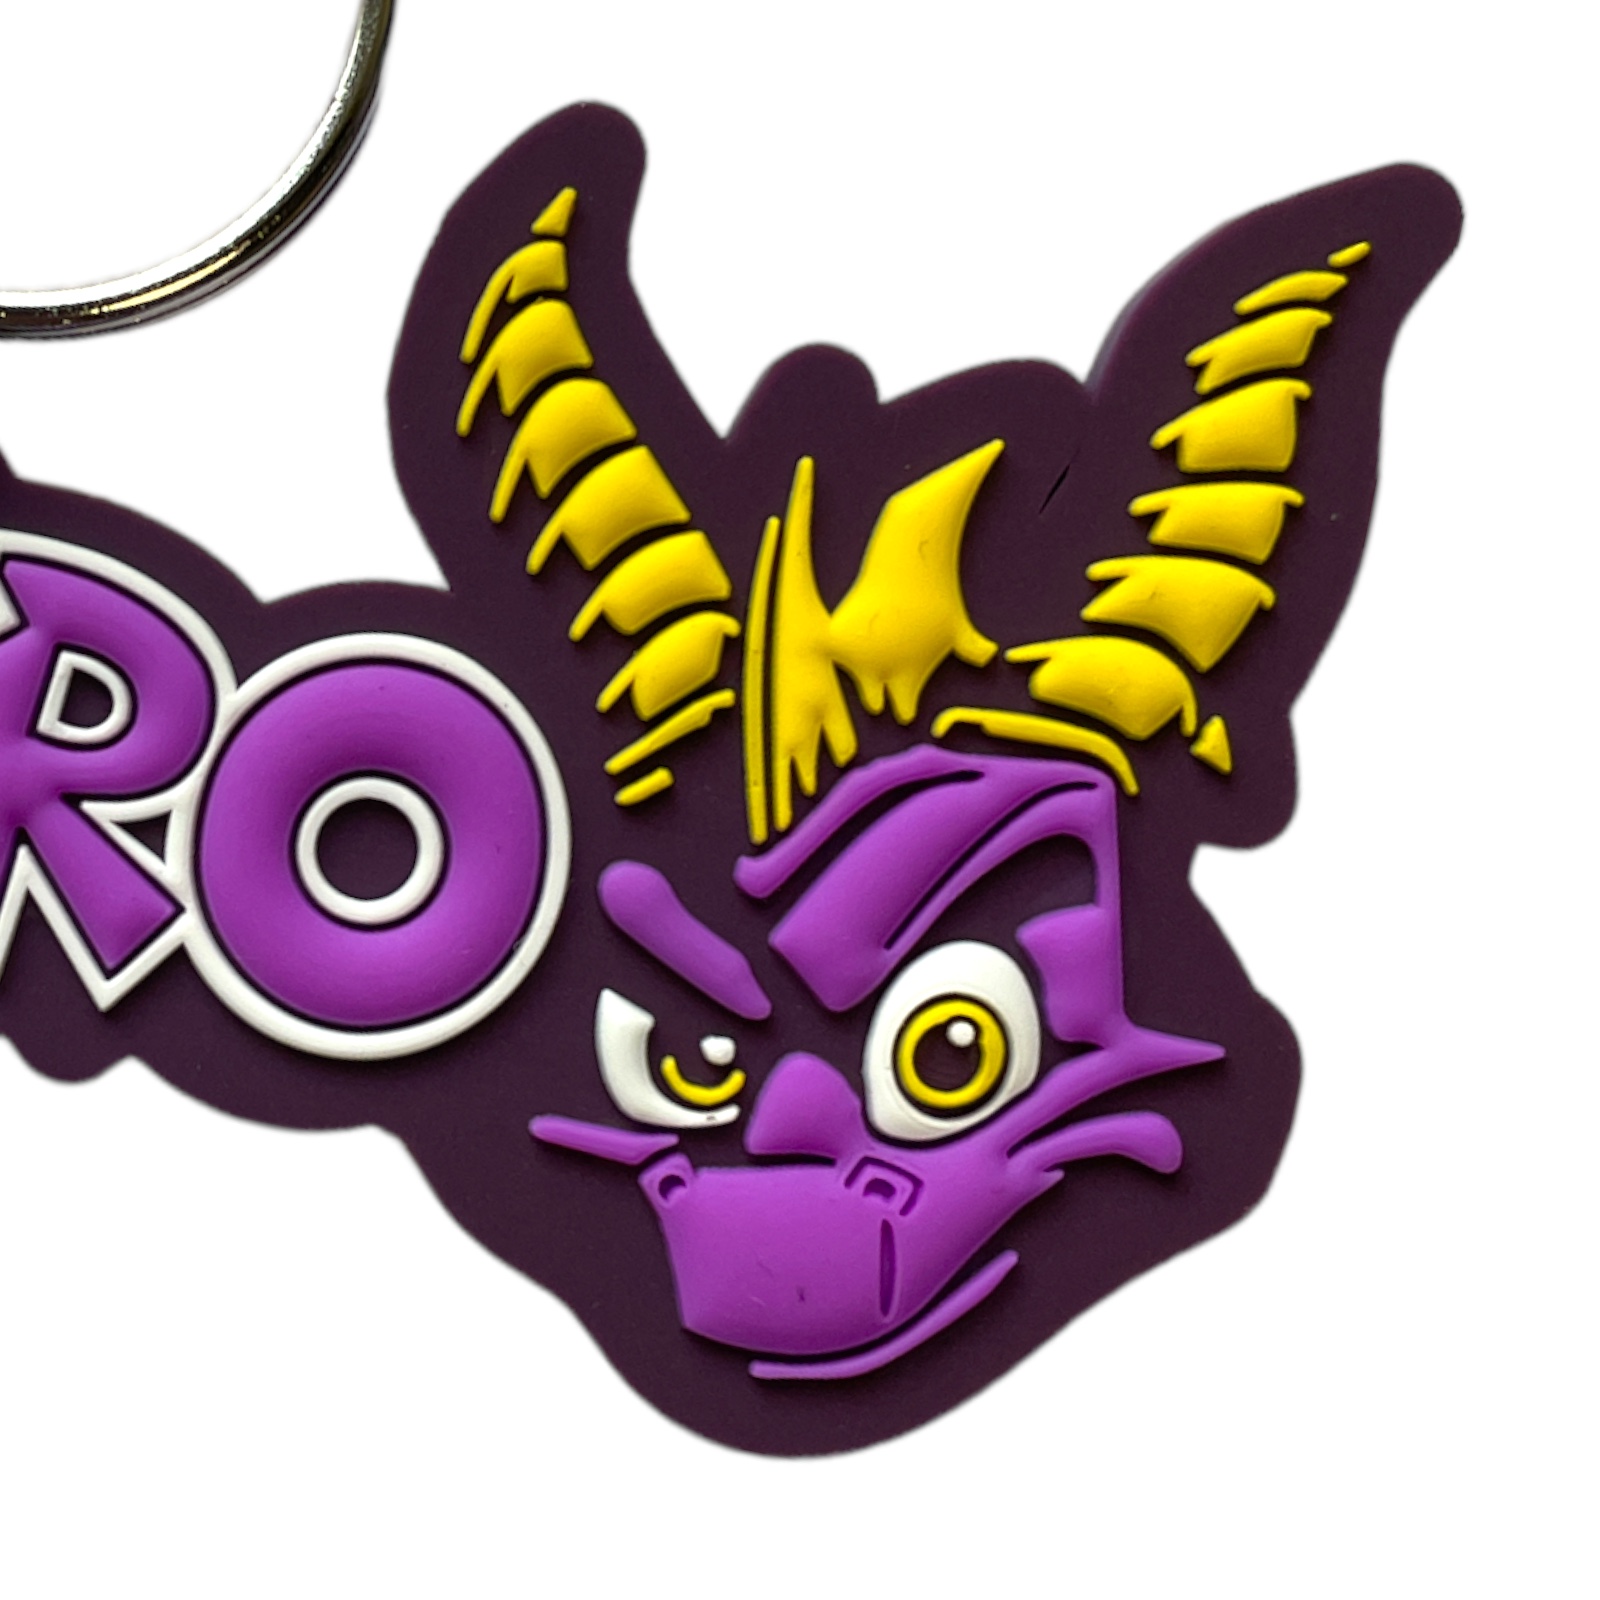 Spyro Logo Schlüsselanhänger - Spyro